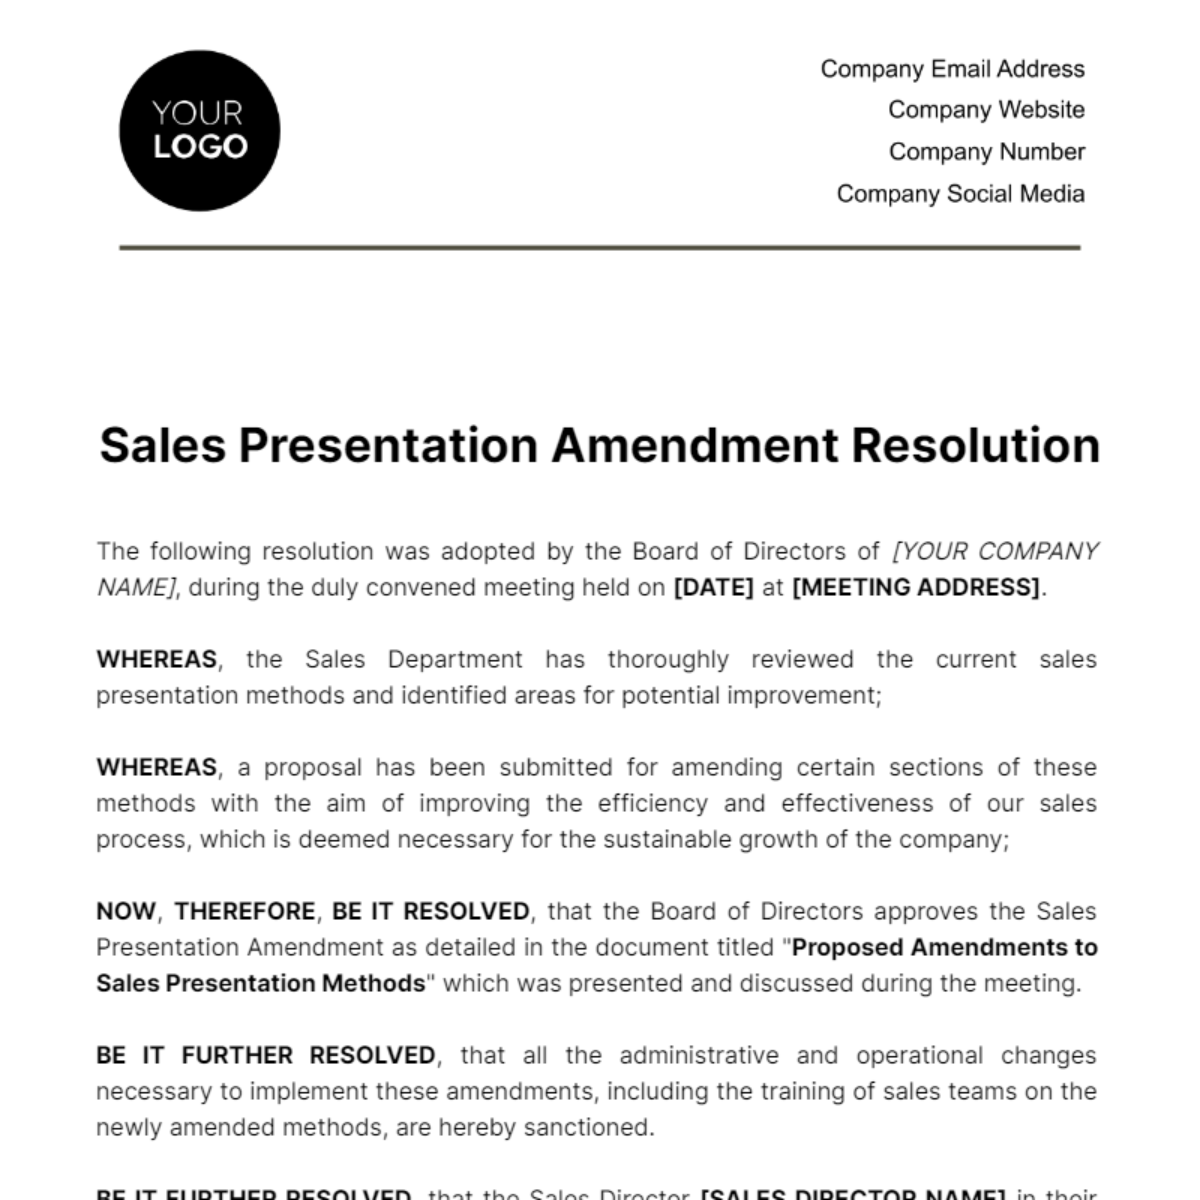 Sales Presentation Amendment Resolution Template